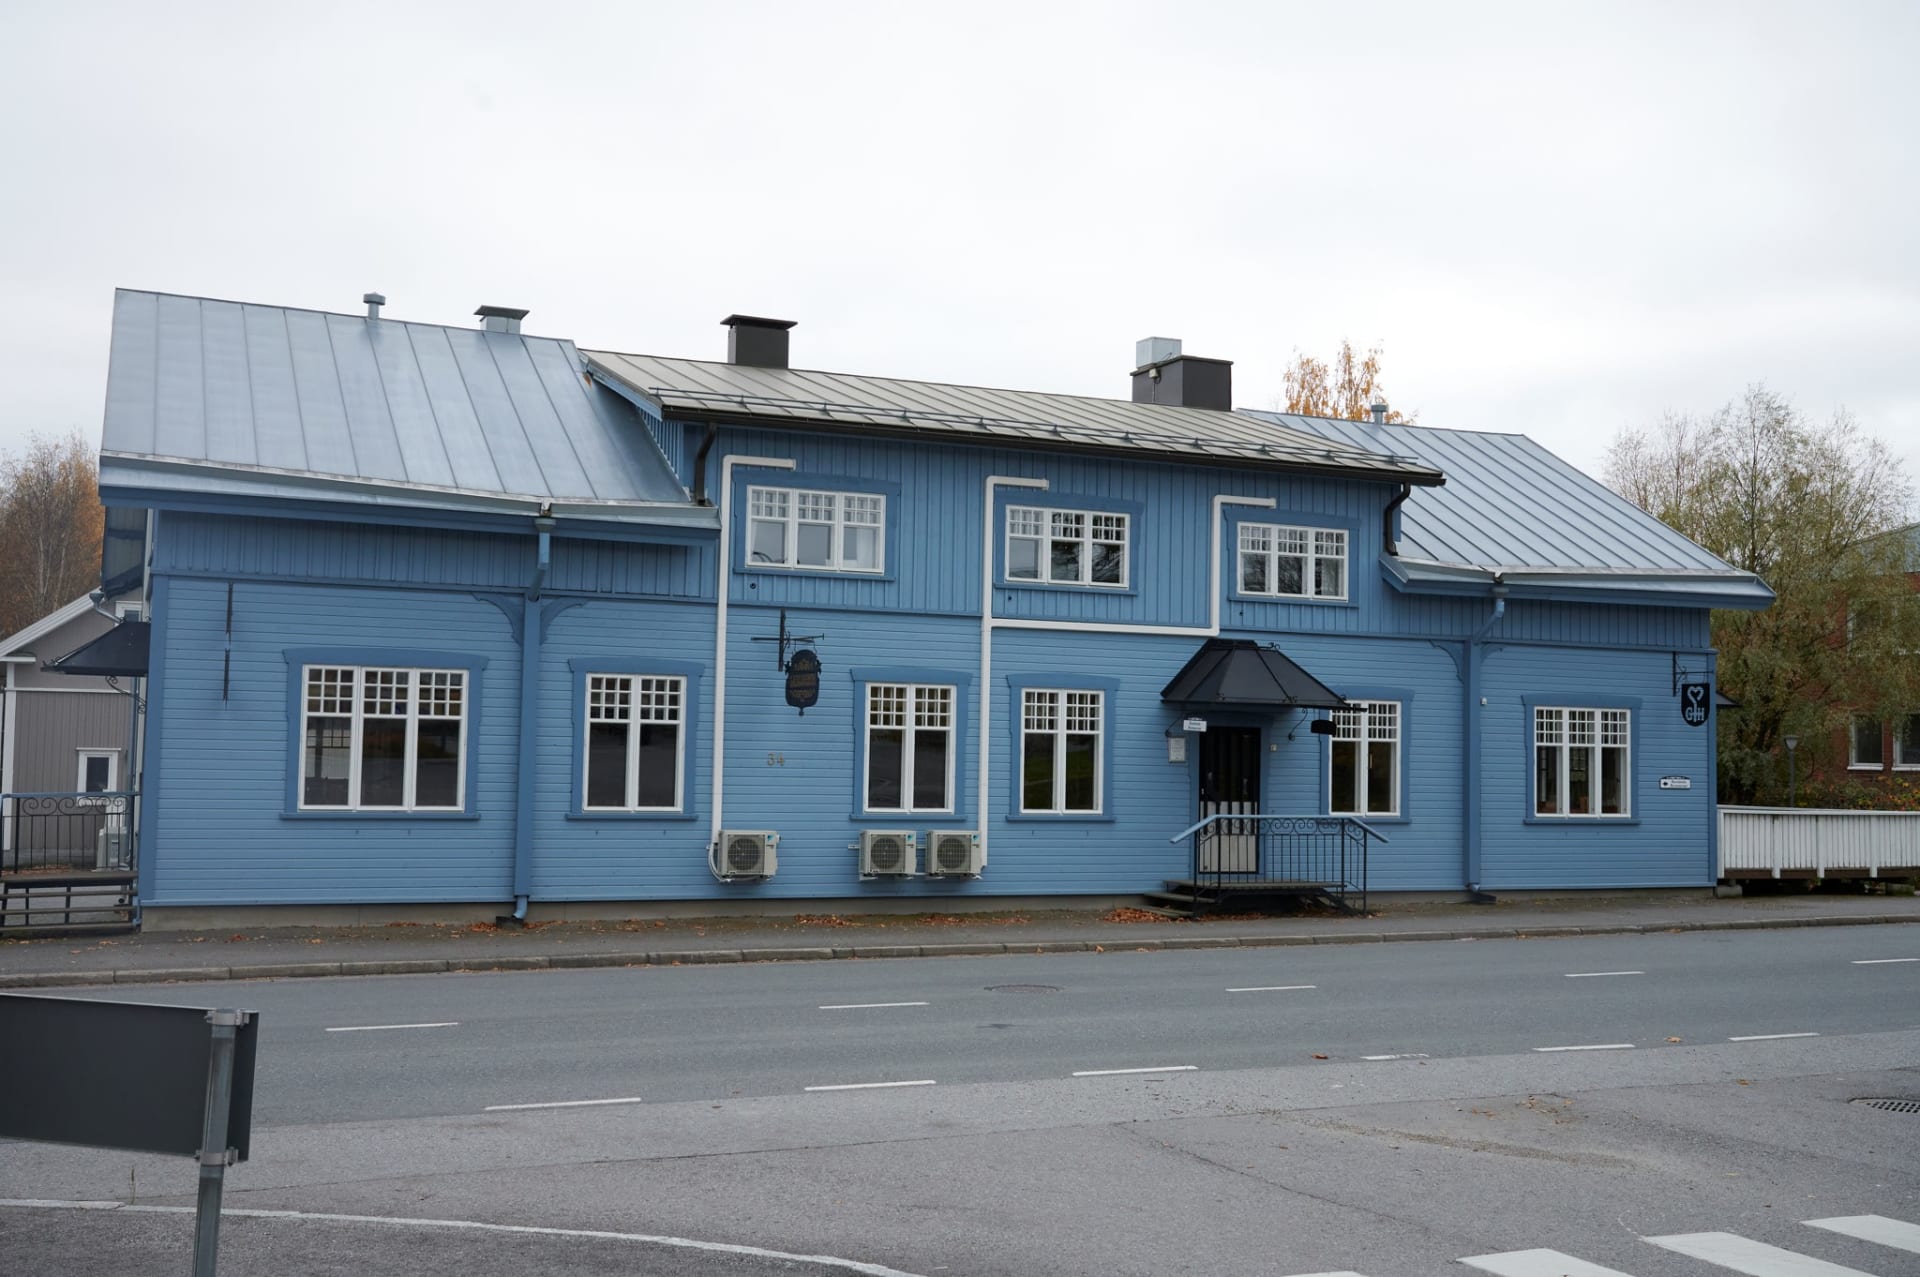 Liekoranta building, an old blue wooden house.